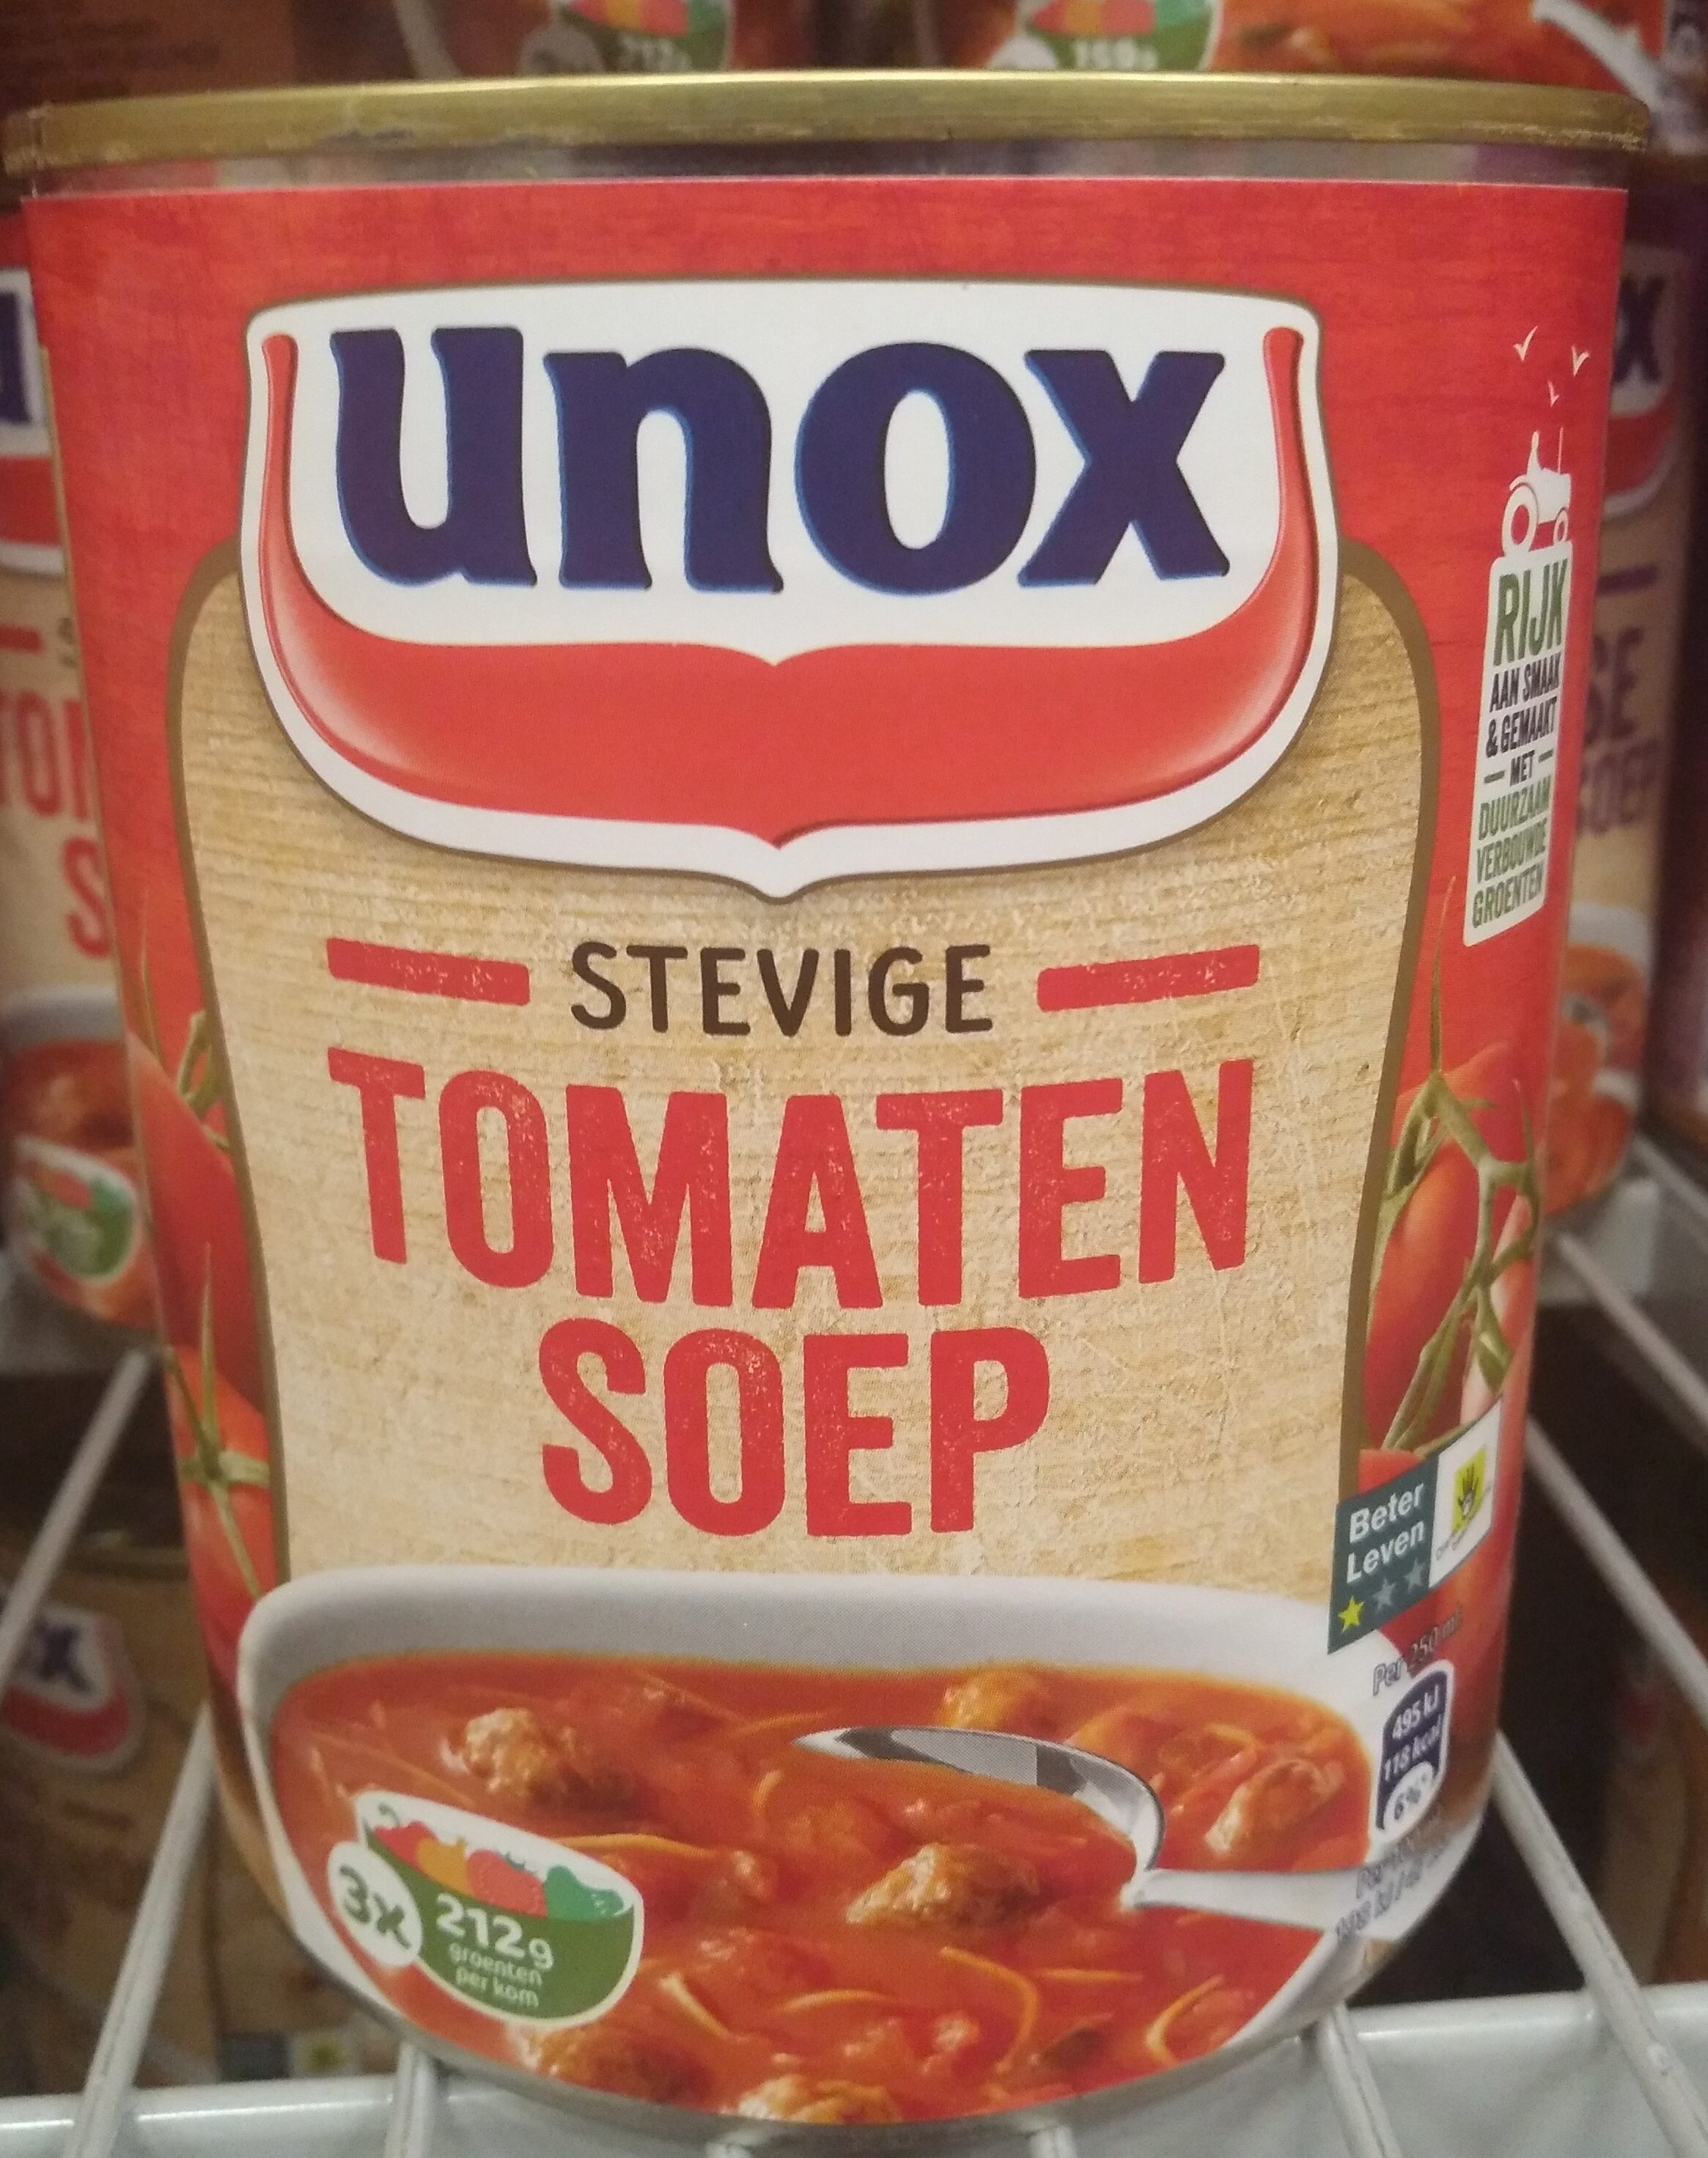 Stevige Tomaten Soep - Product